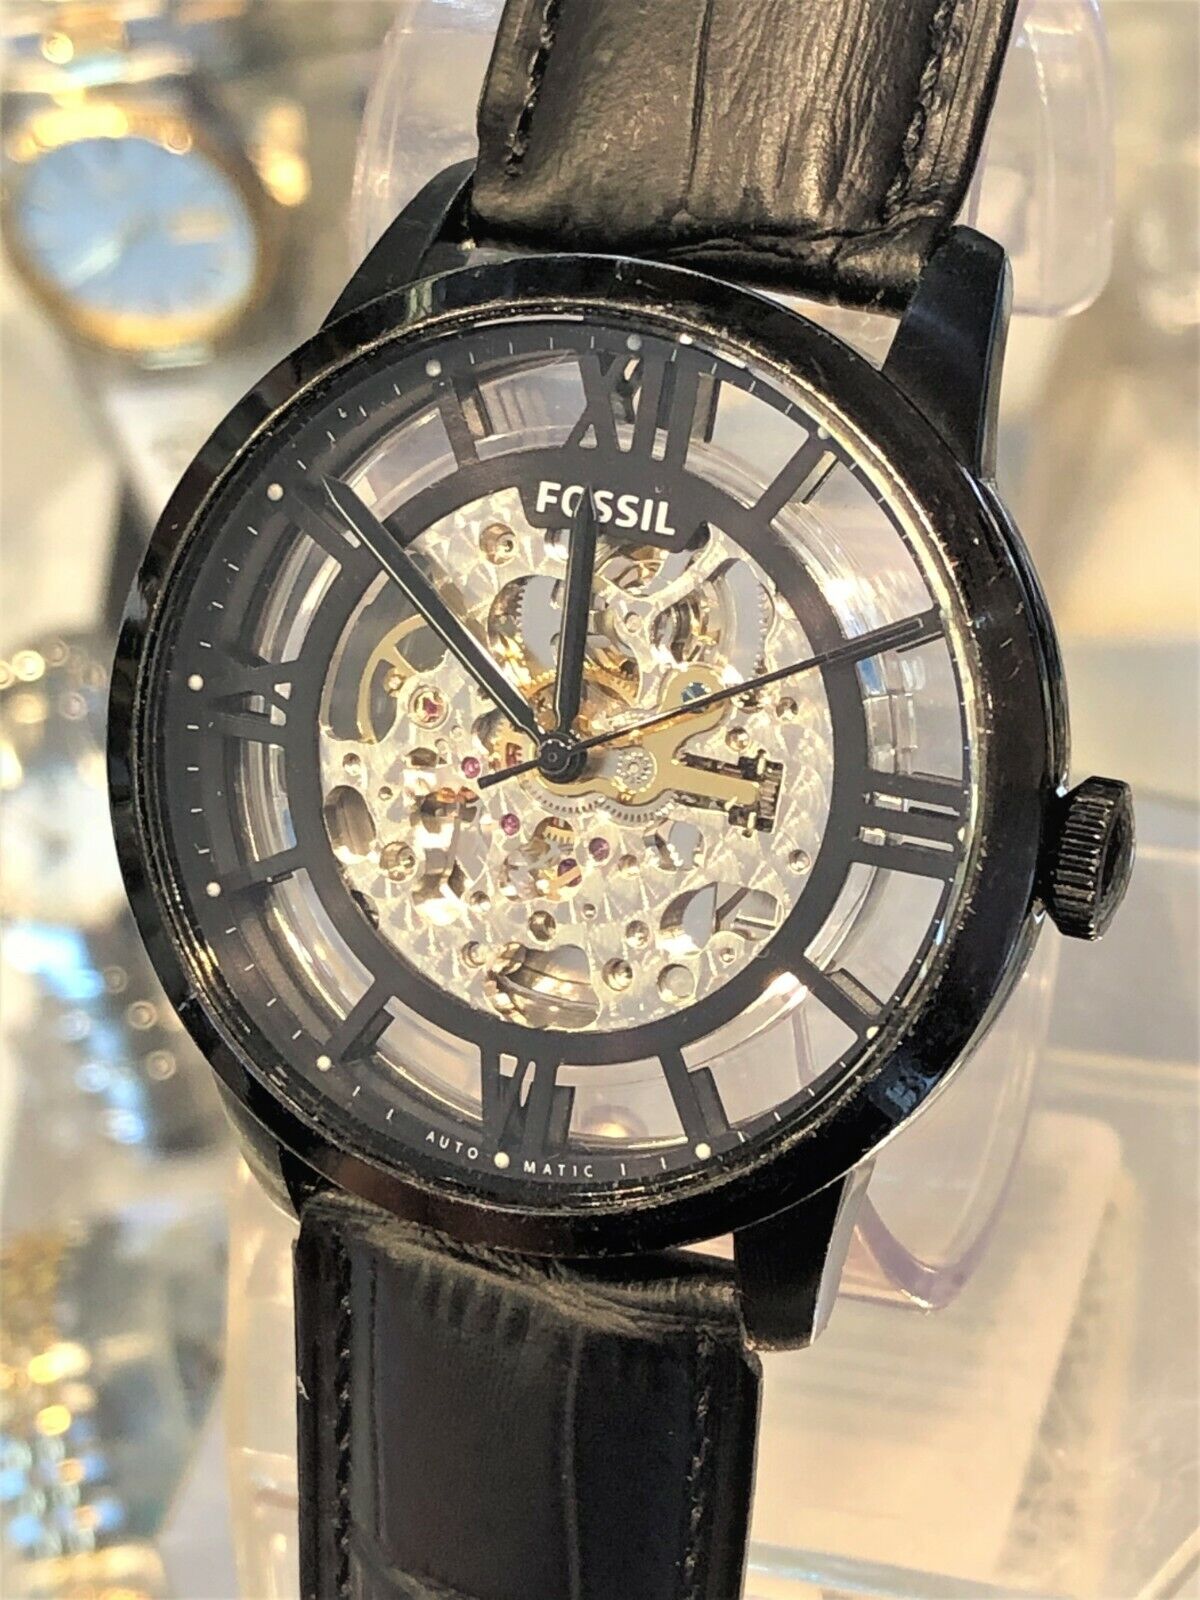 avond Verenigen voor Watch Fossil Mechanical Watch [w/ 20pc Jewels]– w/ Black Strap, Gift,  Celebratio | eBay